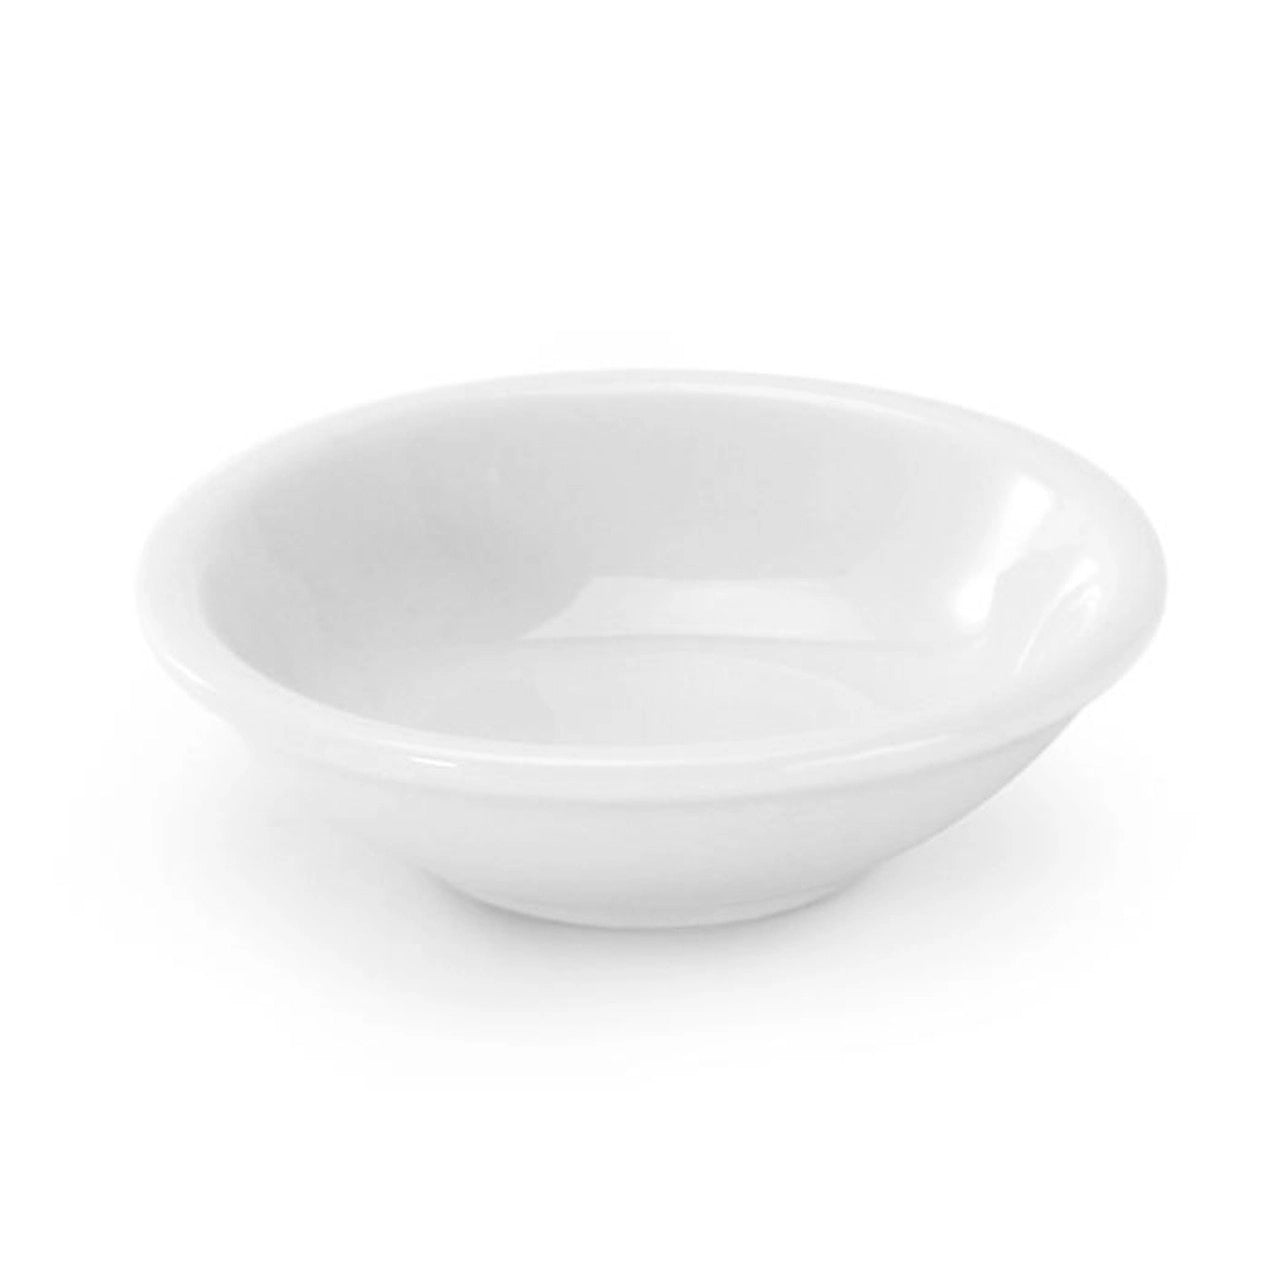 Small White Dish